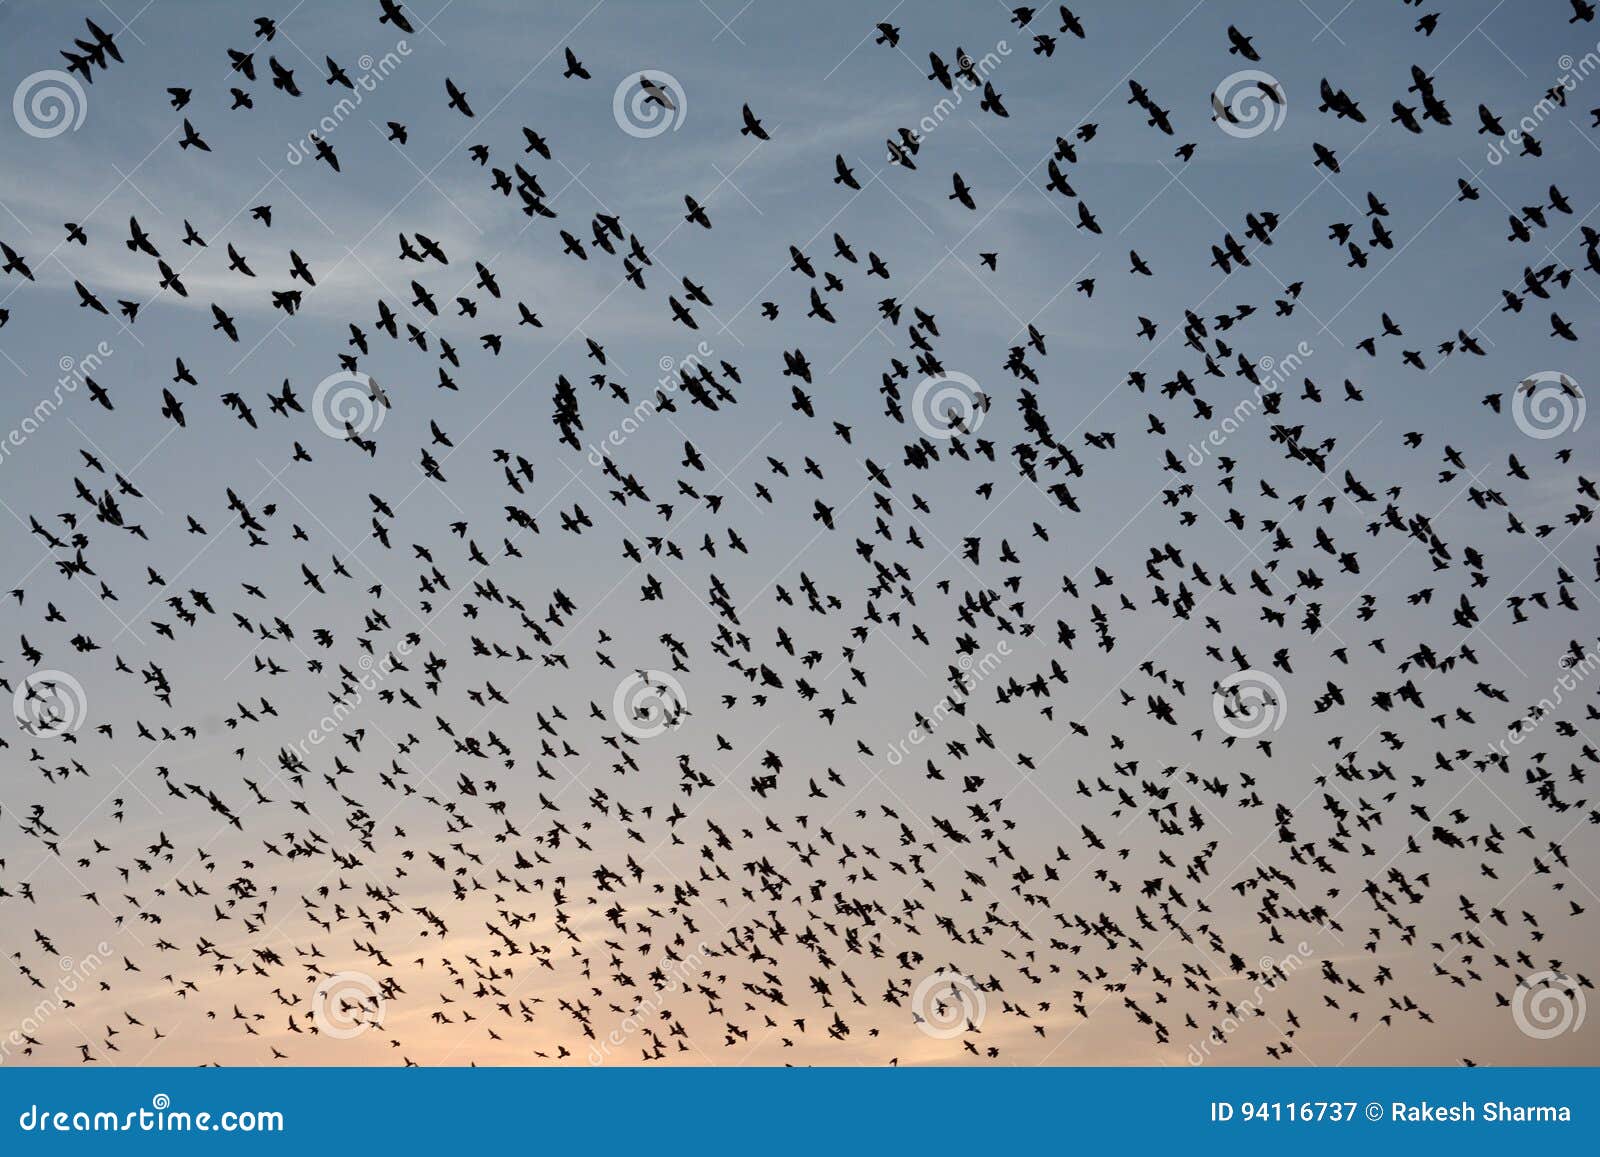 flocking behavior of starlings birds in bikaner